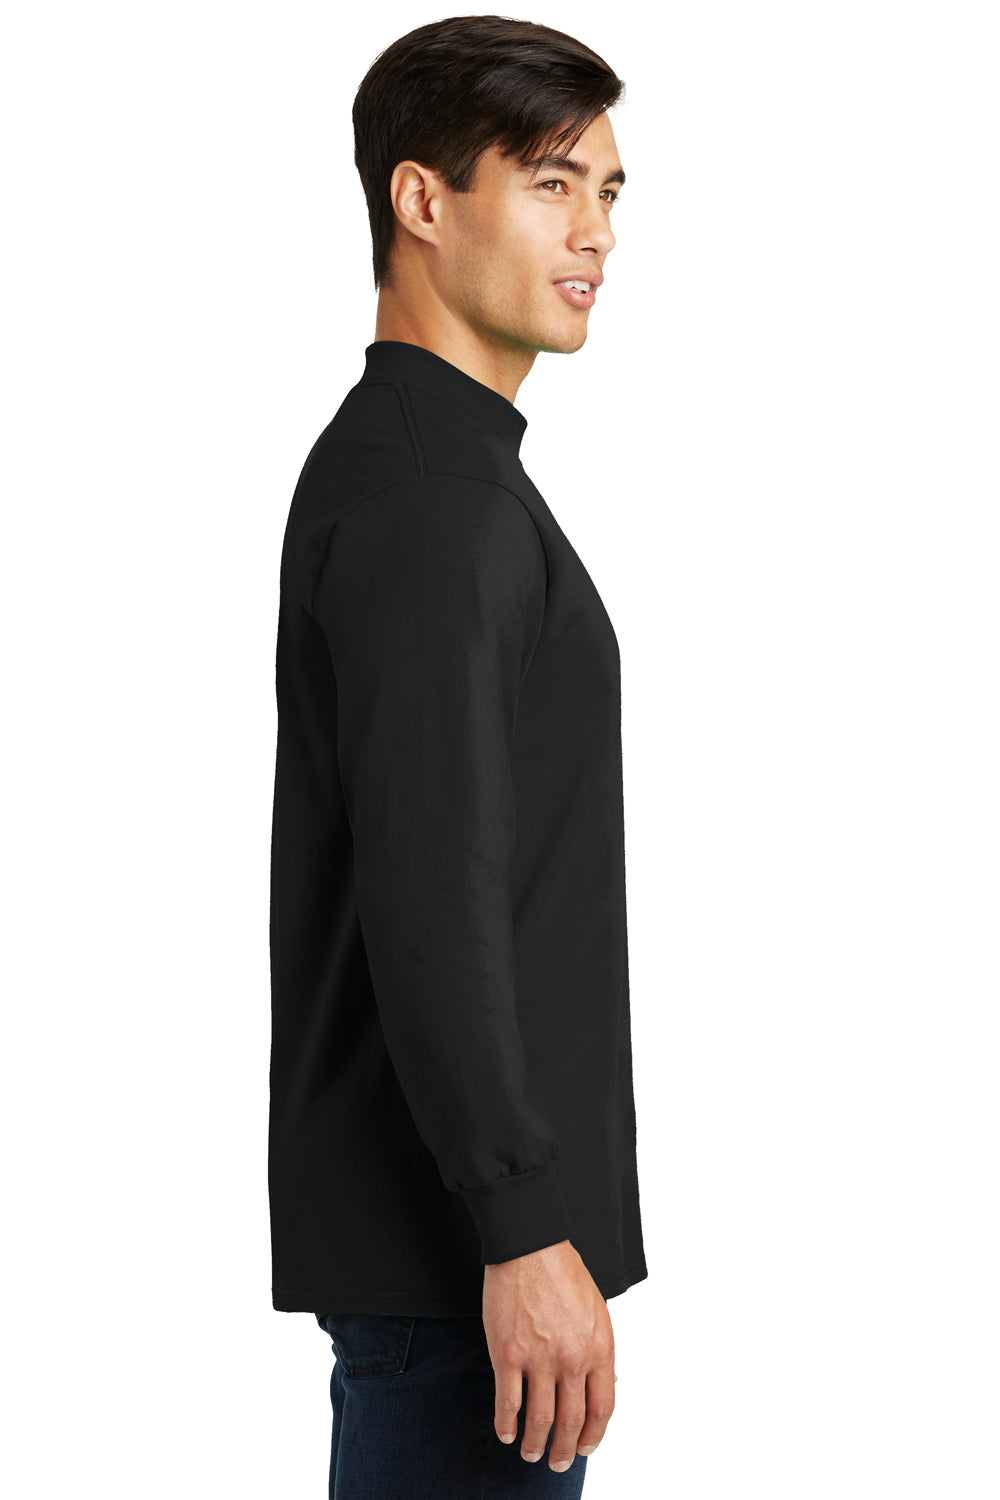 Port & Company PC61M Mens Essential Long Sleeve Mock Neck T-Shirt Black Side